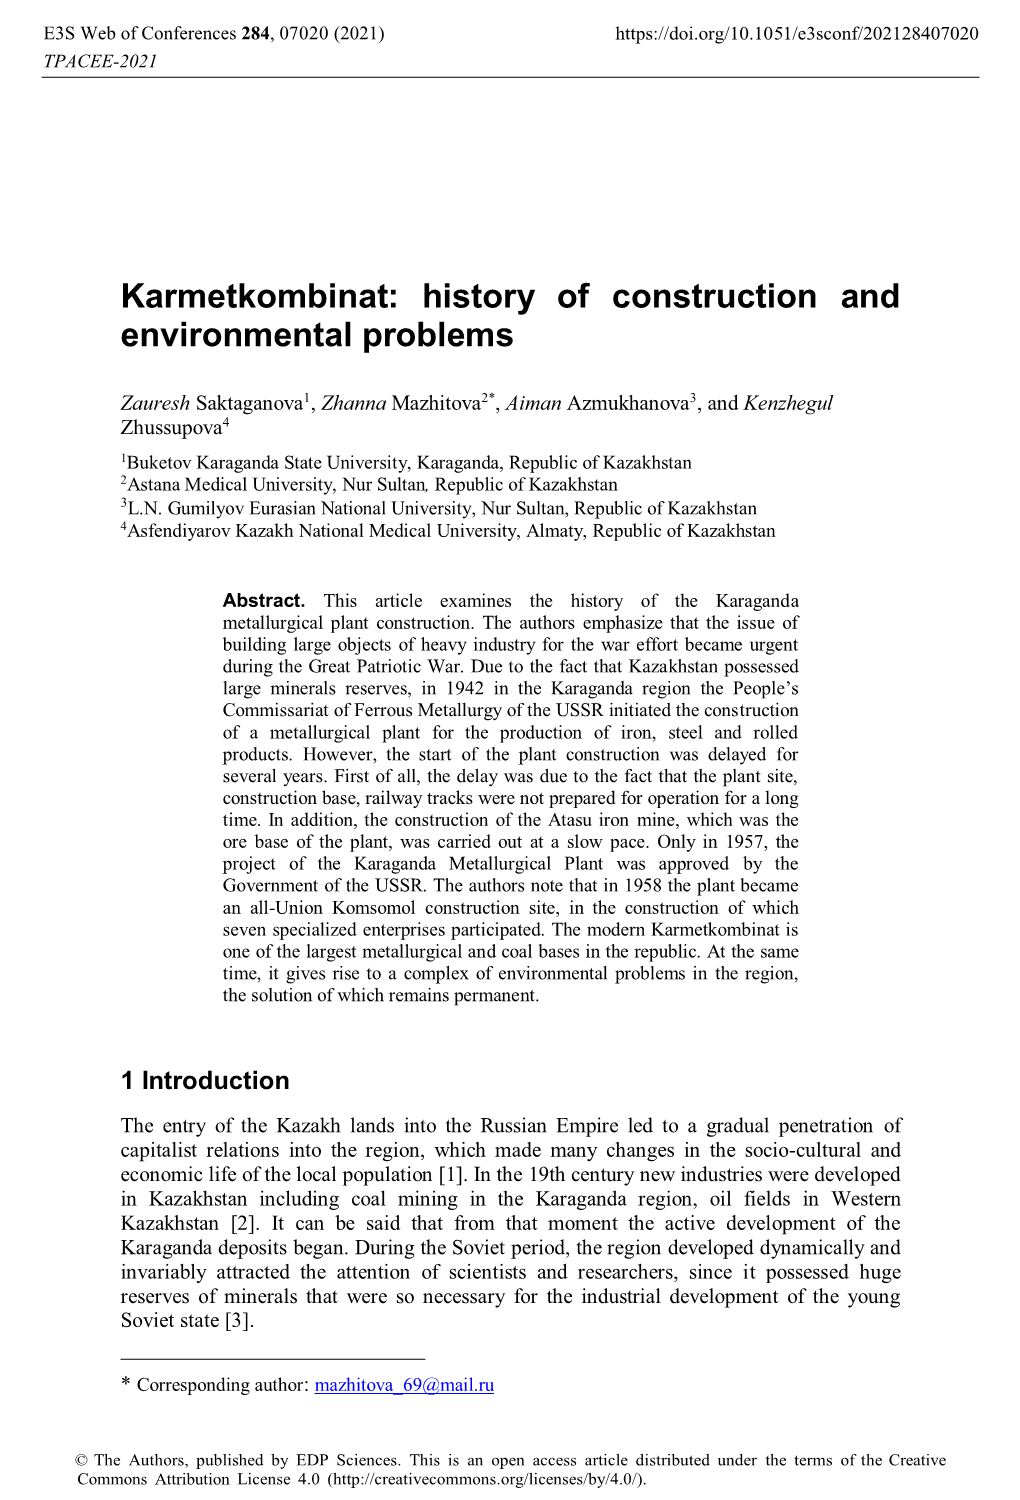 Karmetkombinat: History of Construction and Environmental Problems